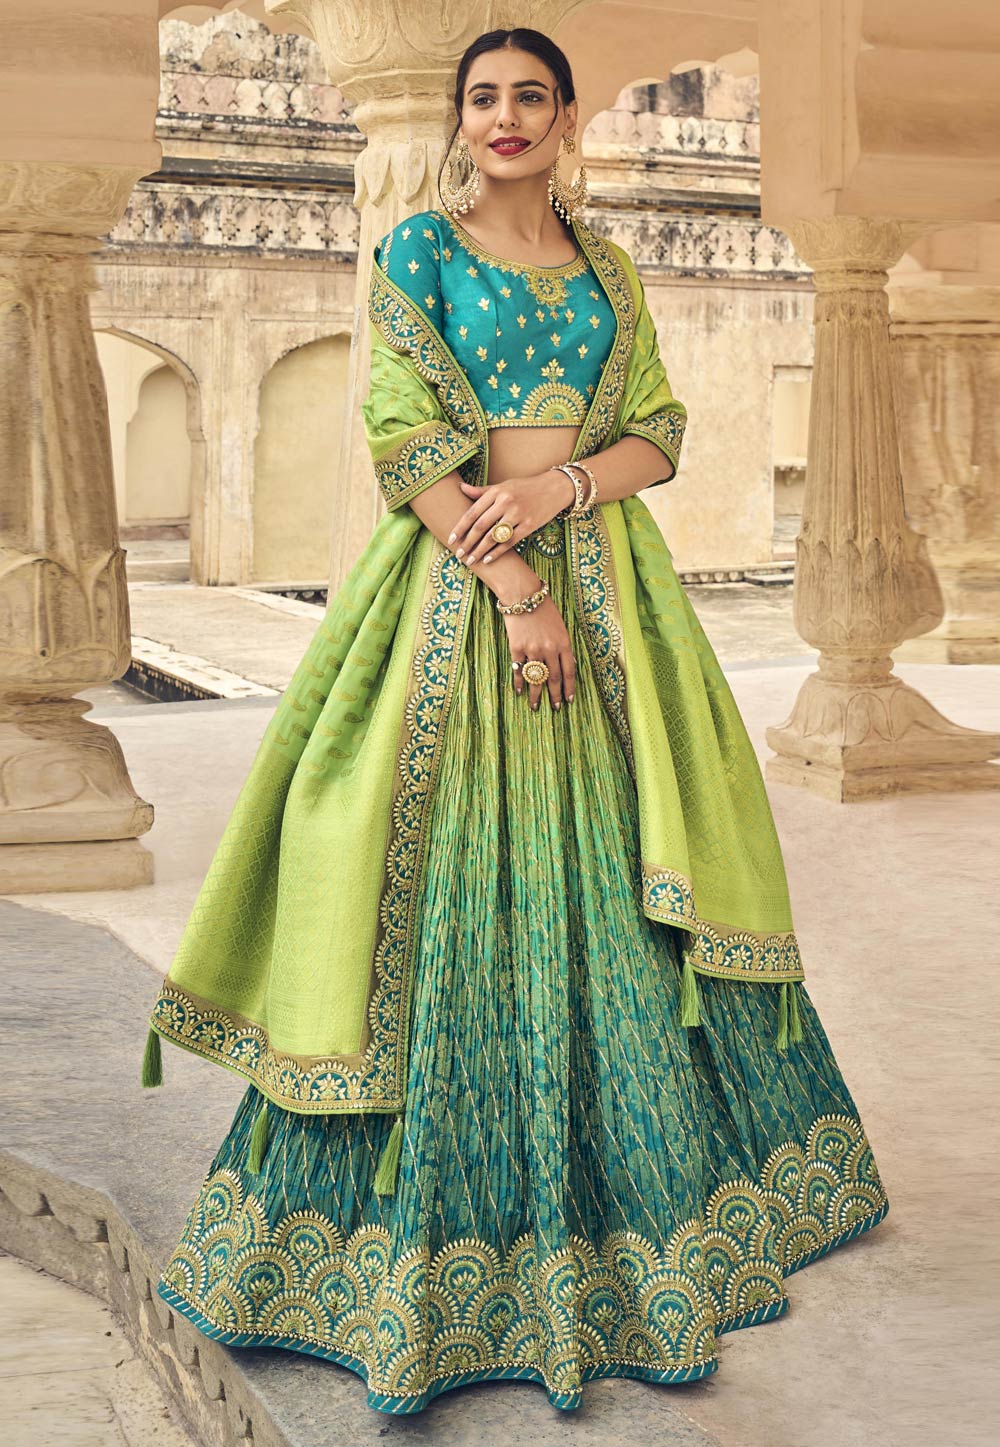 Modern banarasi lehenga | Party wear indian dresses, Mehendi outfits, Long  blouse designs